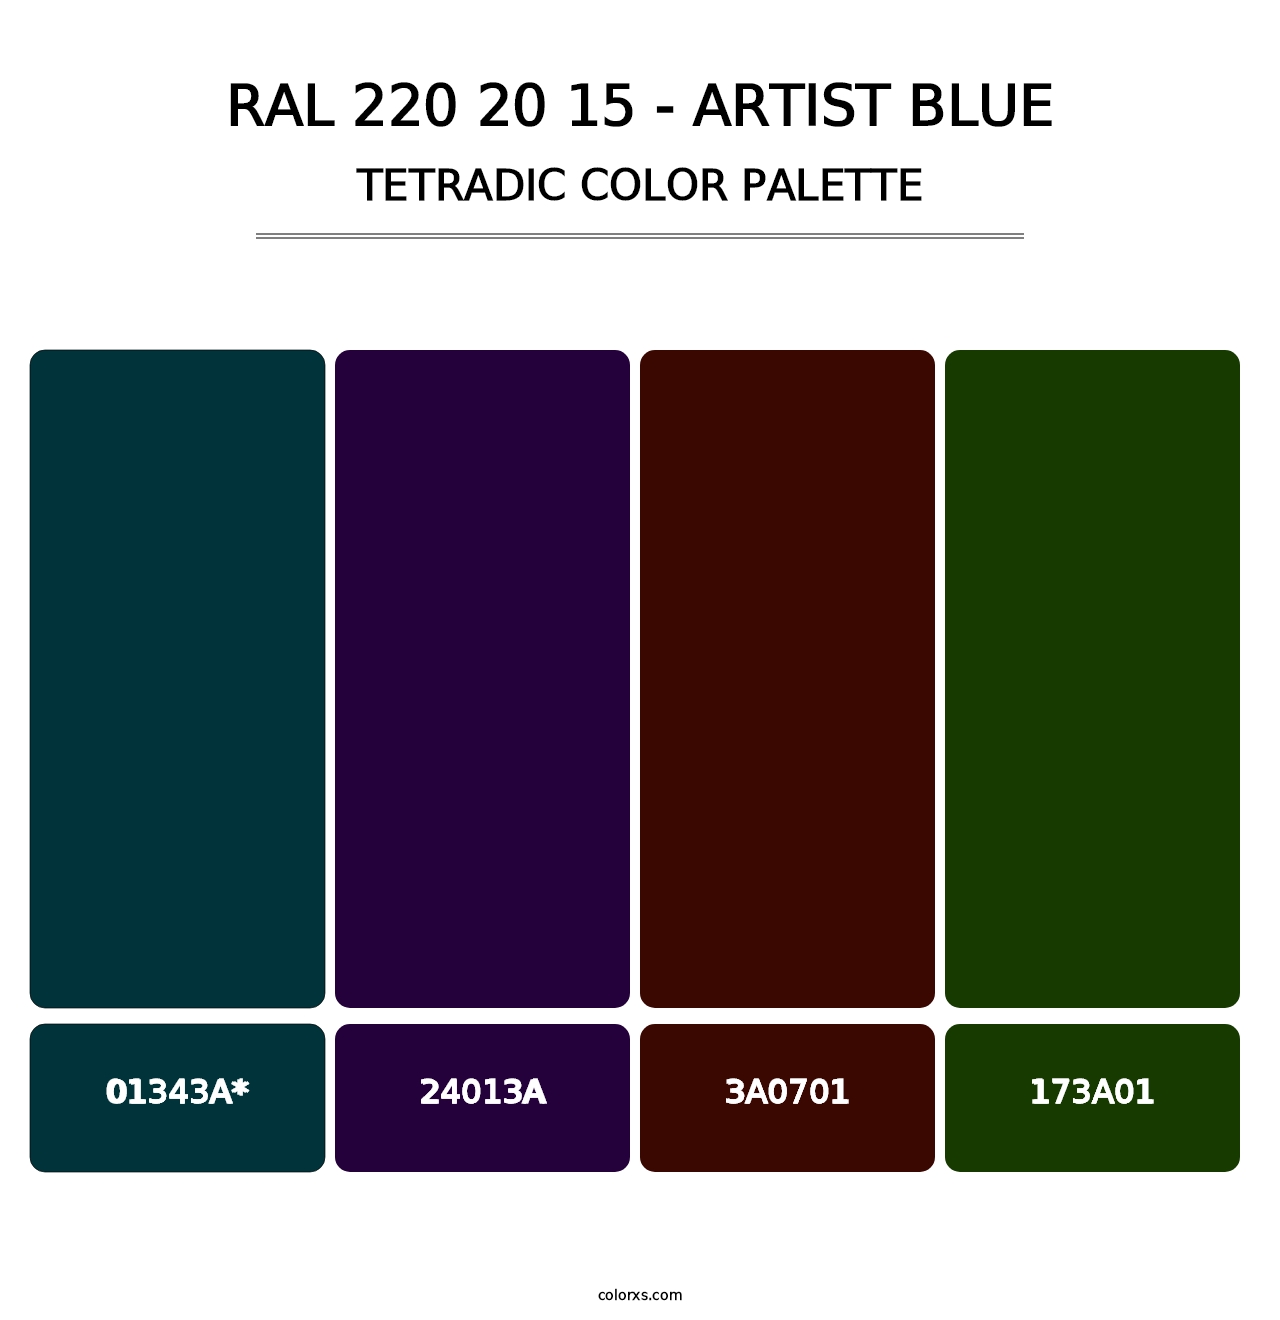 RAL 220 20 15 - Artist Blue - Tetradic Color Palette